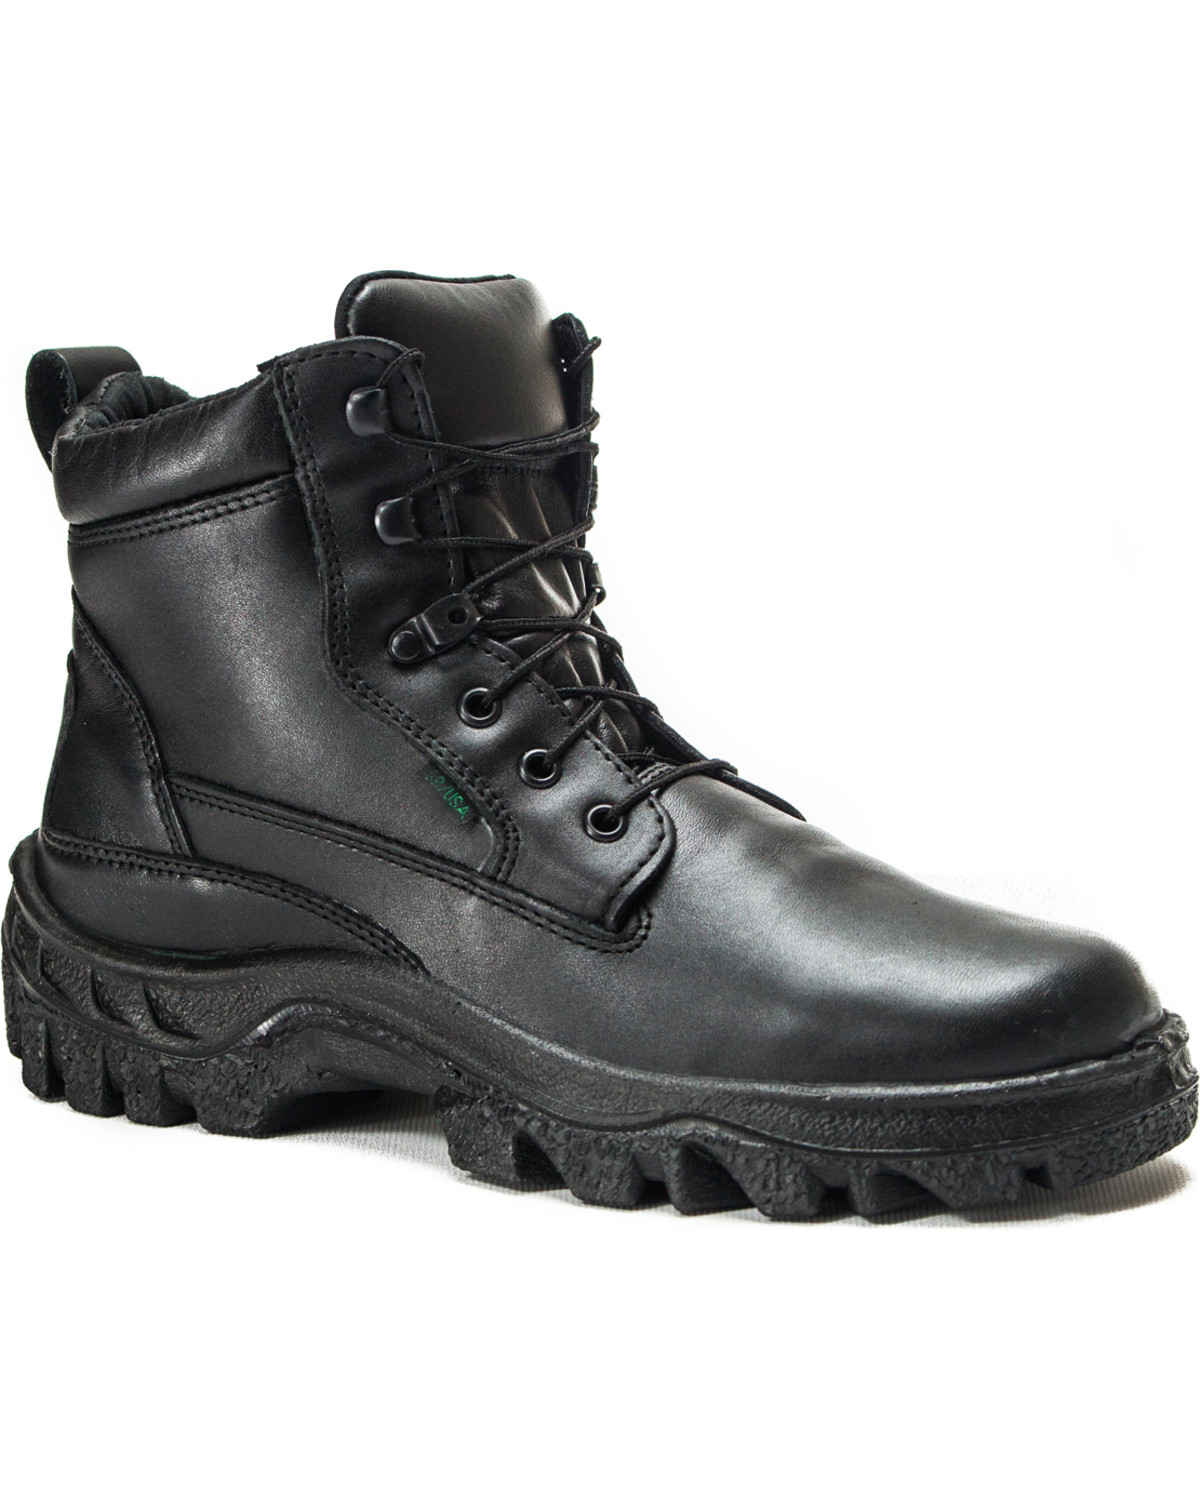 Rocky Men's TMC Postal Approved Duty Boots